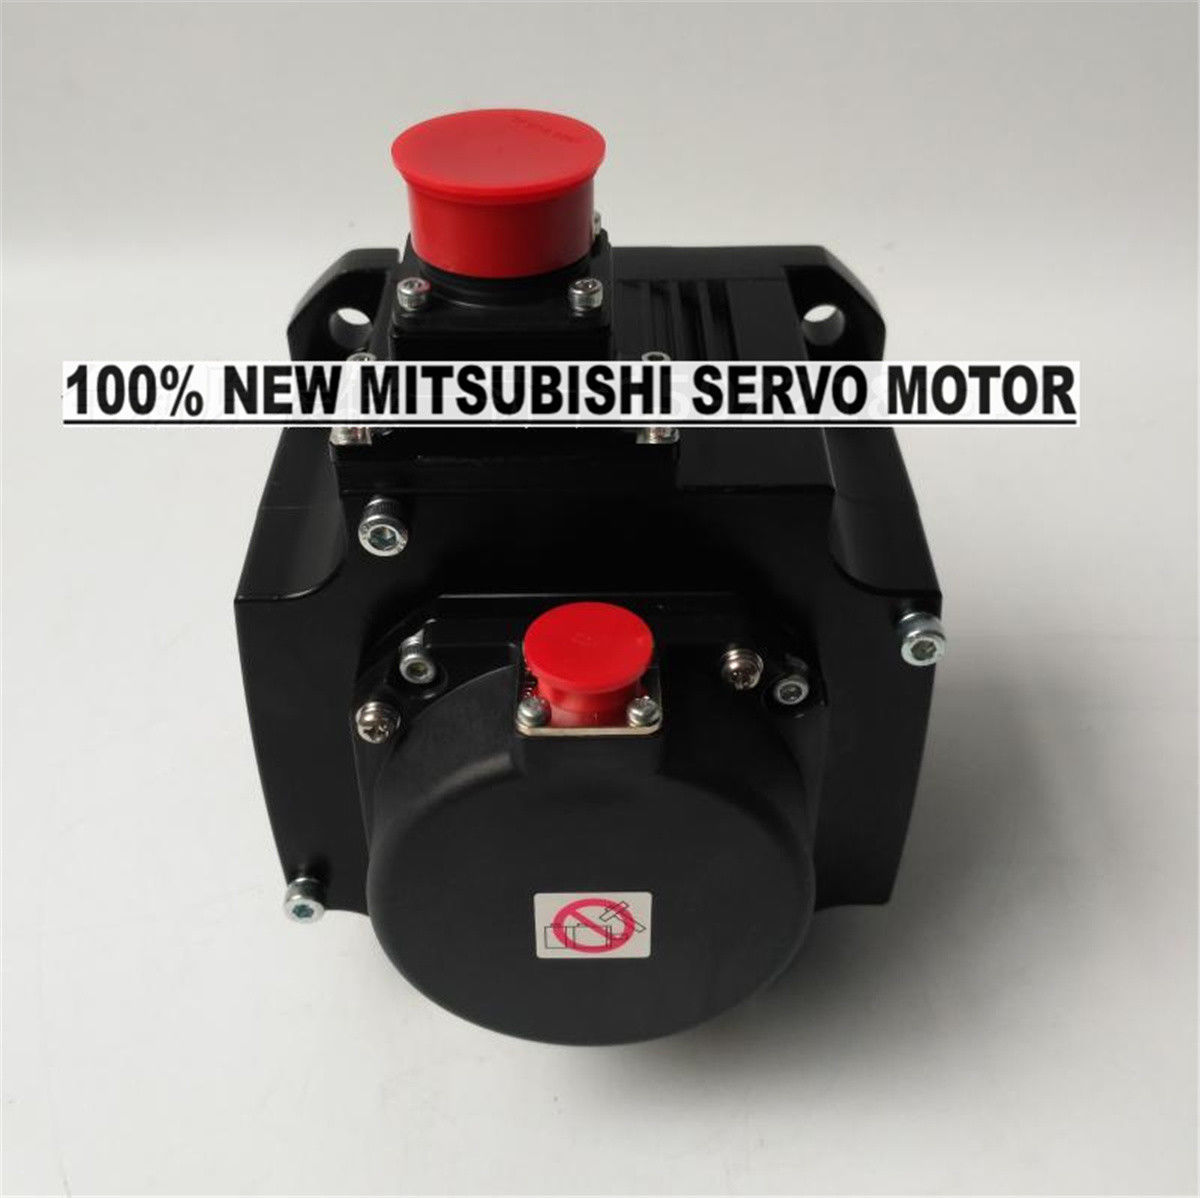 NEW Mitsubishi Servo Motor HG-SR51J in box HGSR51J - Click Image to Close